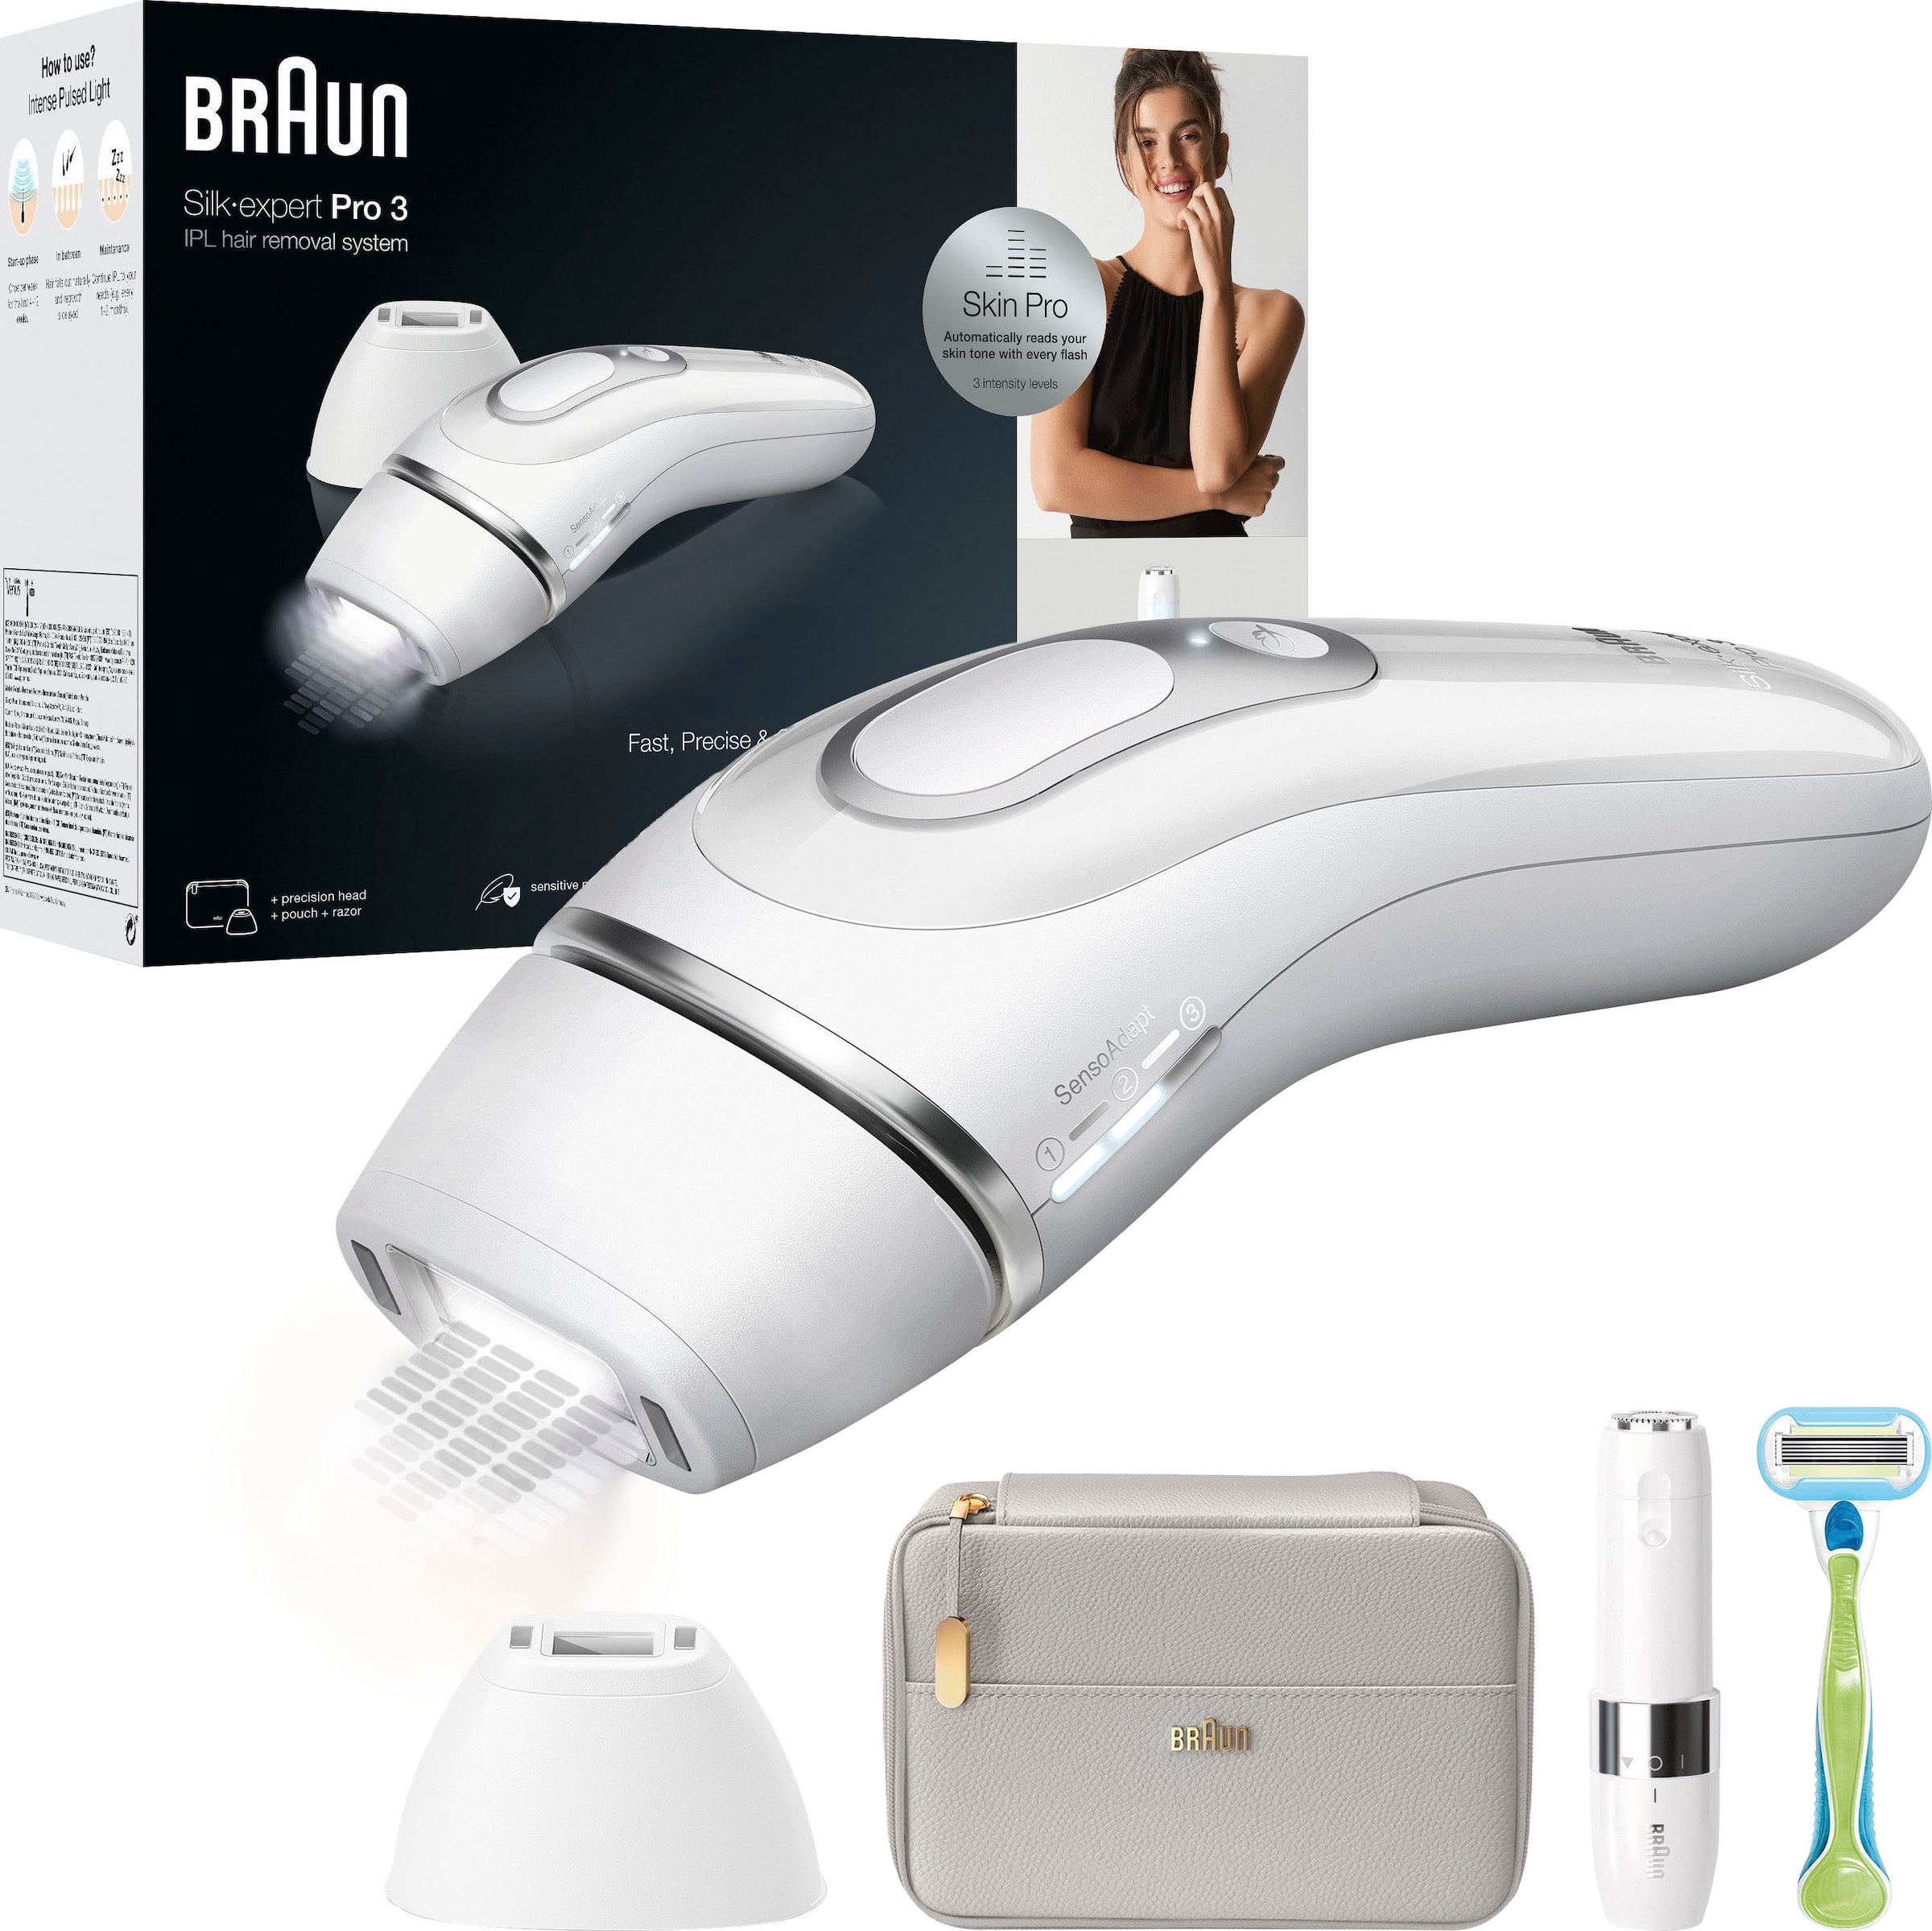 Braun IPL-Haarentferner »Silk-Expert Pro 3 PL3139«, 300.000 Lichtimpulse, Skin Pro-Technologie, 300.000 Lichtimpulse